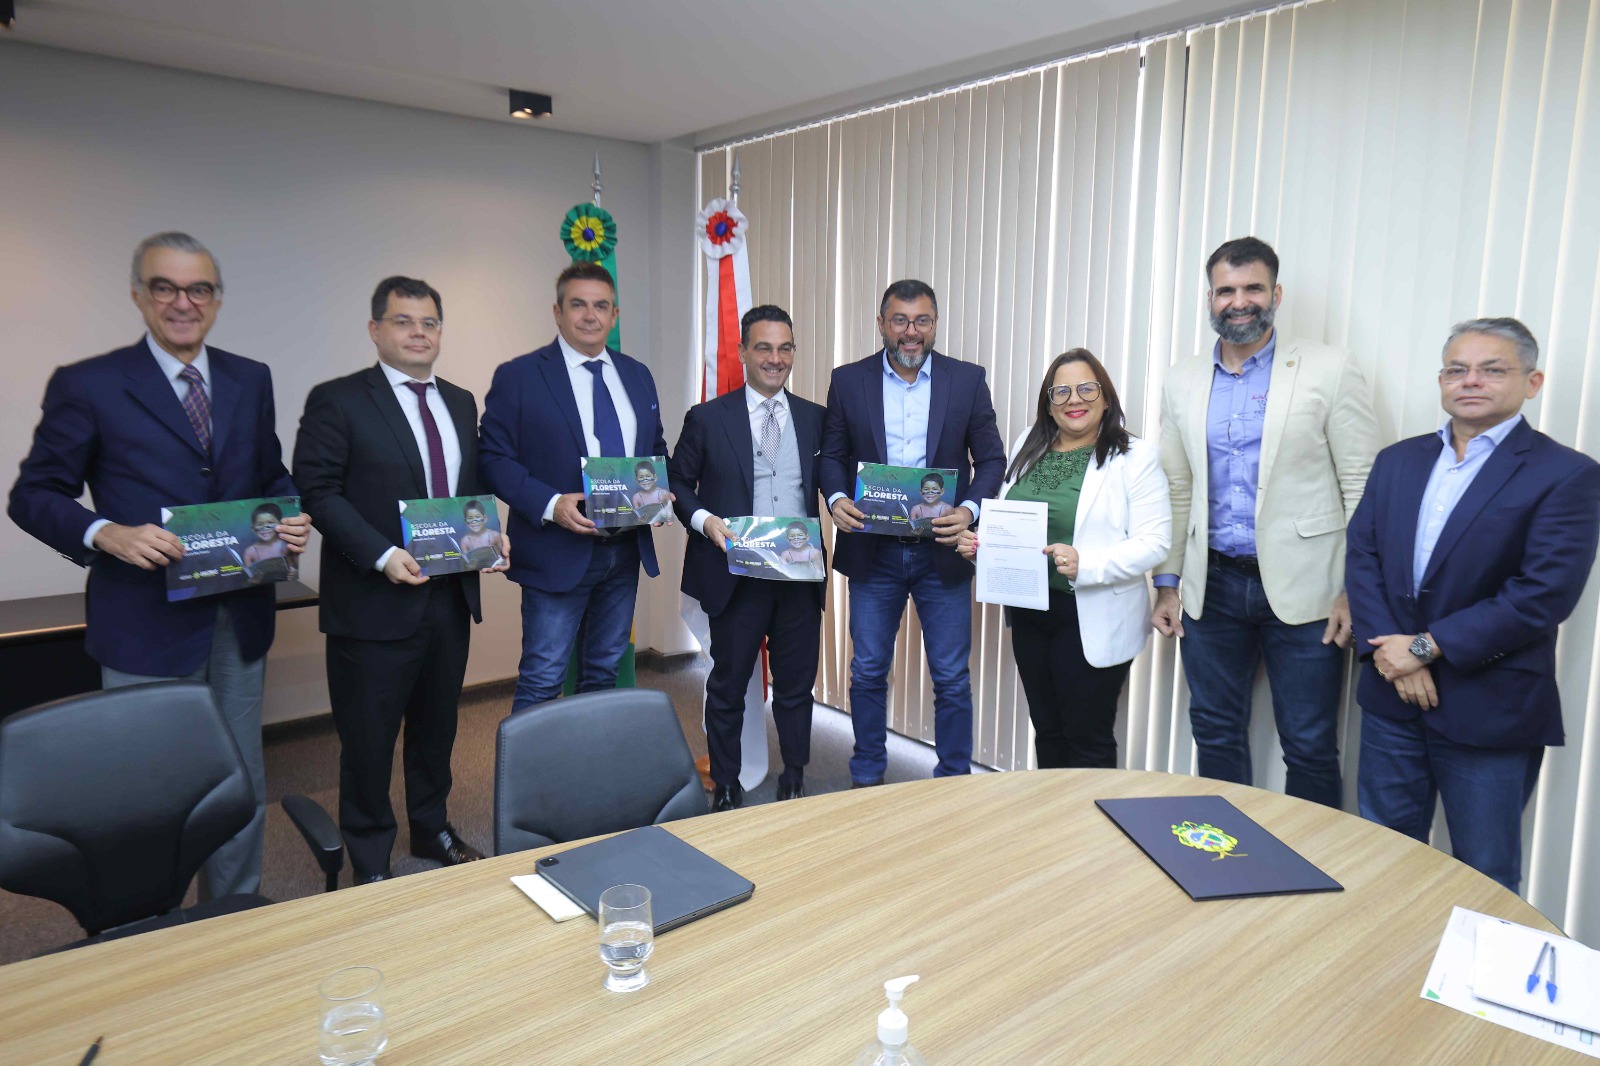 Government of AM signs partnership to build a Escola da Floresta unit in Carauari